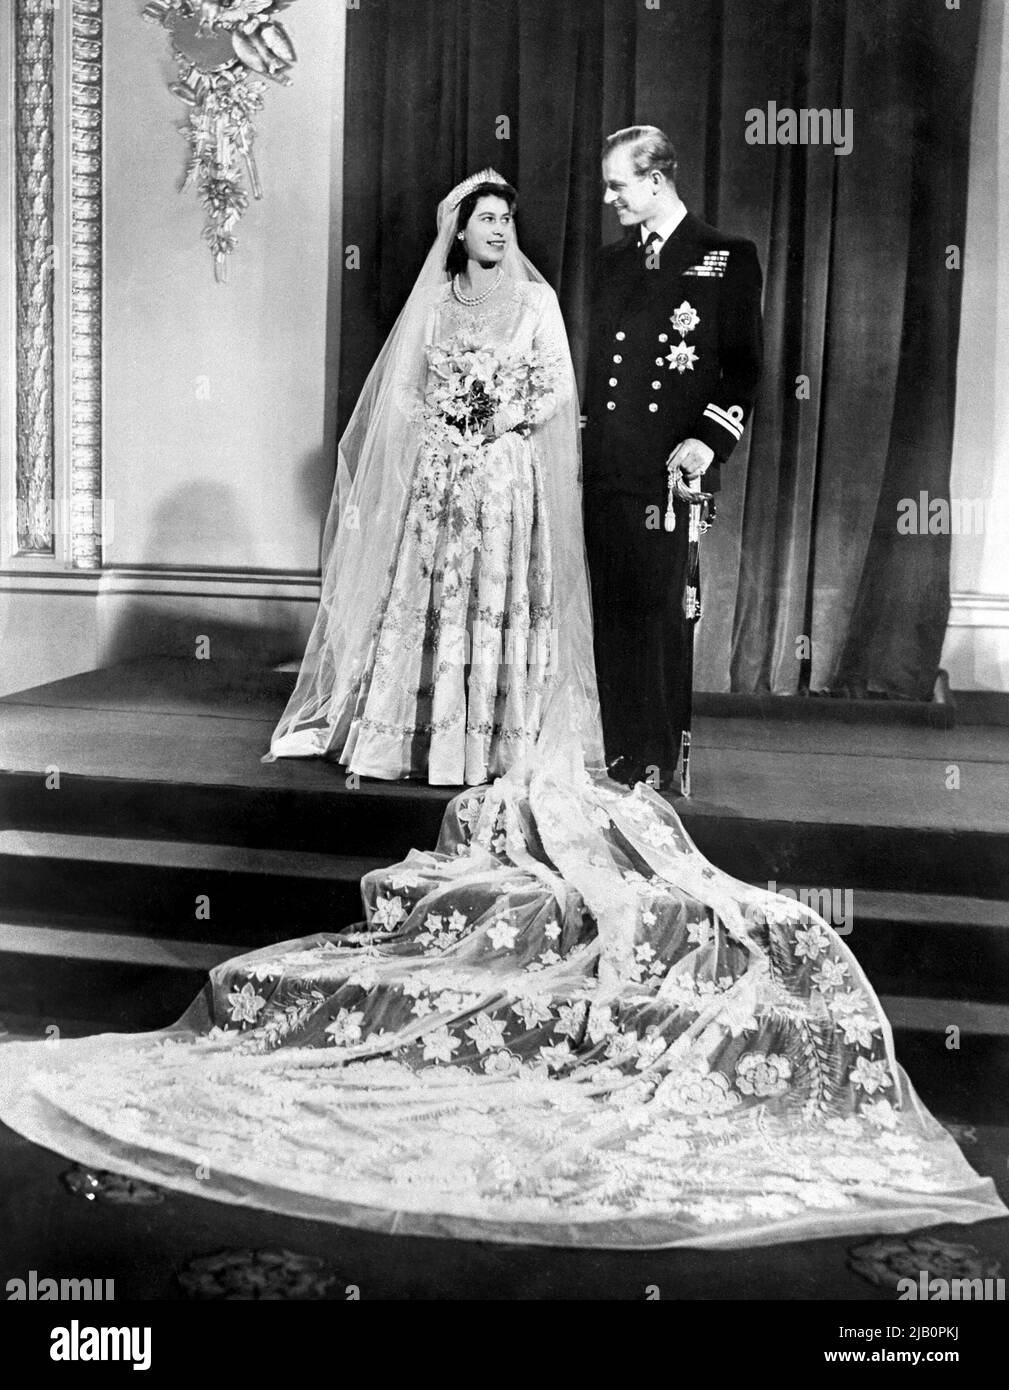 Britain's Princess Elizabeth (future Queen Elizabeth II) (L) and Philip, Duke of Edinburgh (R) pose on their wedding day at Buckingham Palace in London on November 20, 1947 Stock Photo